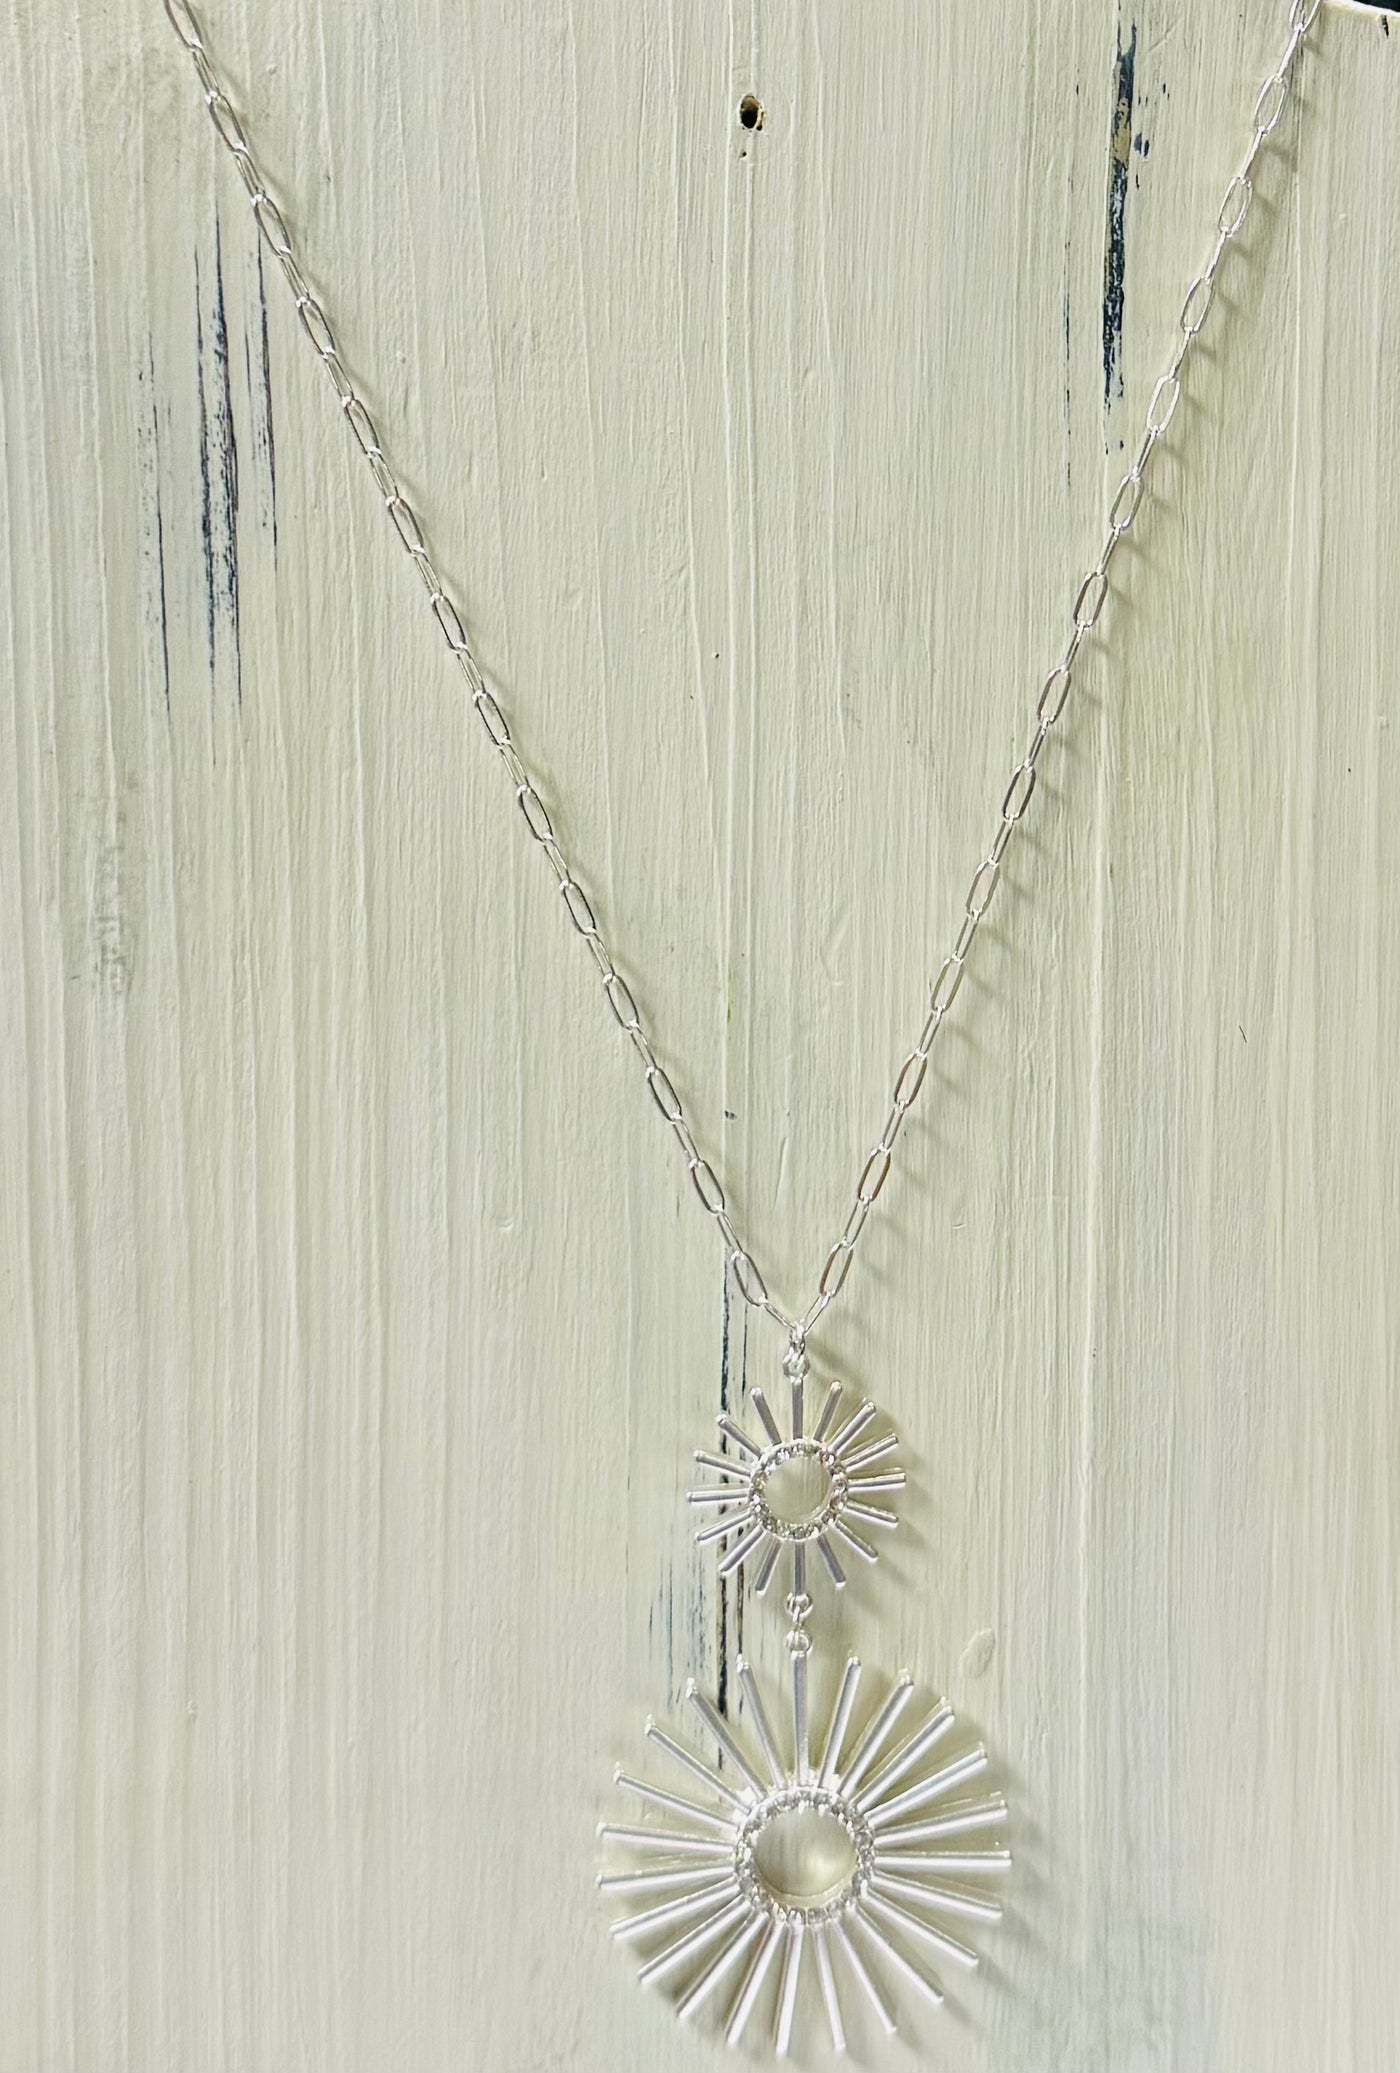 Silver Sunburst Necklace Set w/Rhinestone Drop